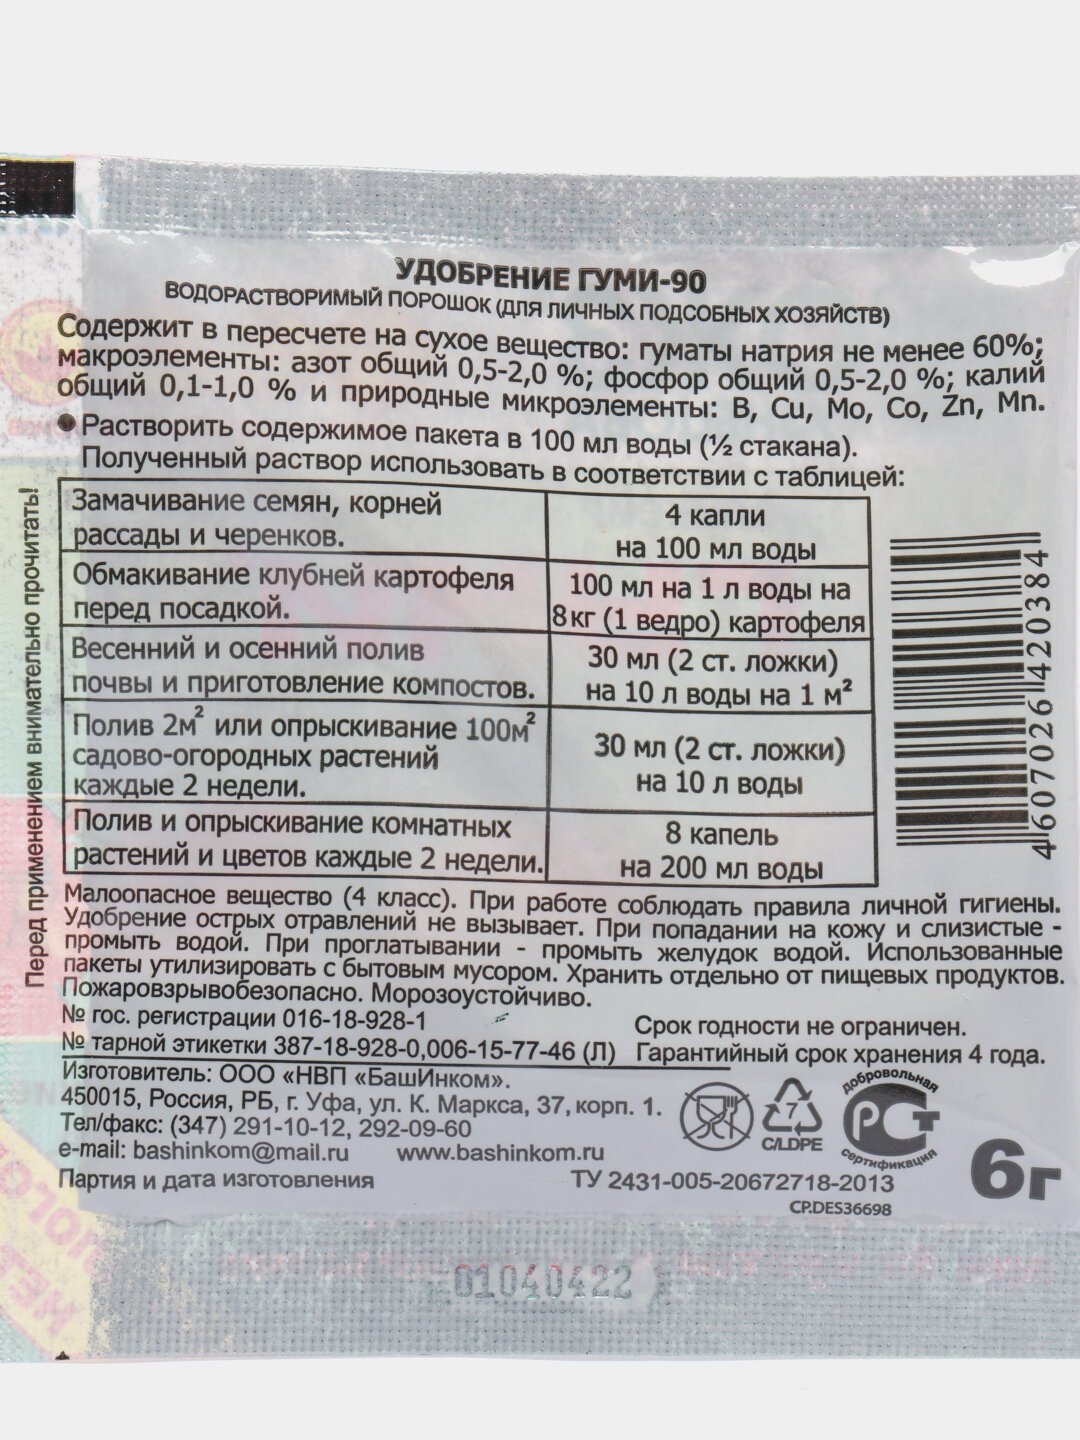 Средство от колорадского жука гуми+БТБ Картофель, 3 упаковки по 6 пакетов по 30 гр (180 г)